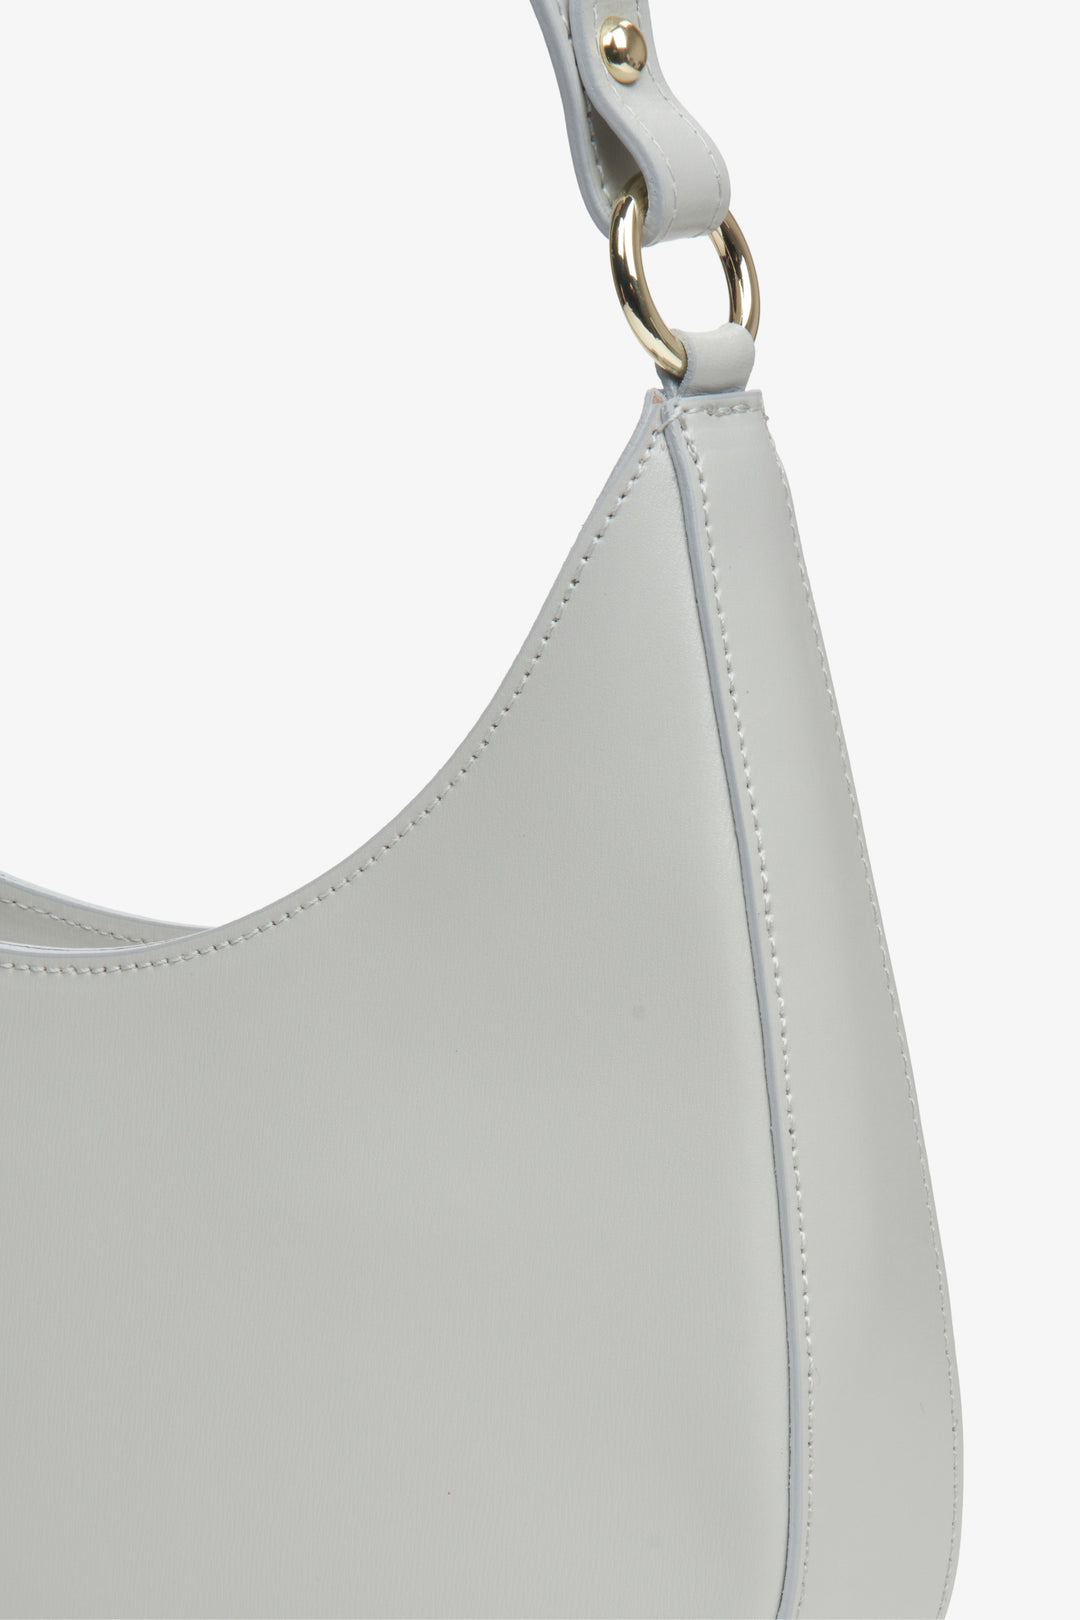 Women's Italian natural leather shoulder bag in grey.